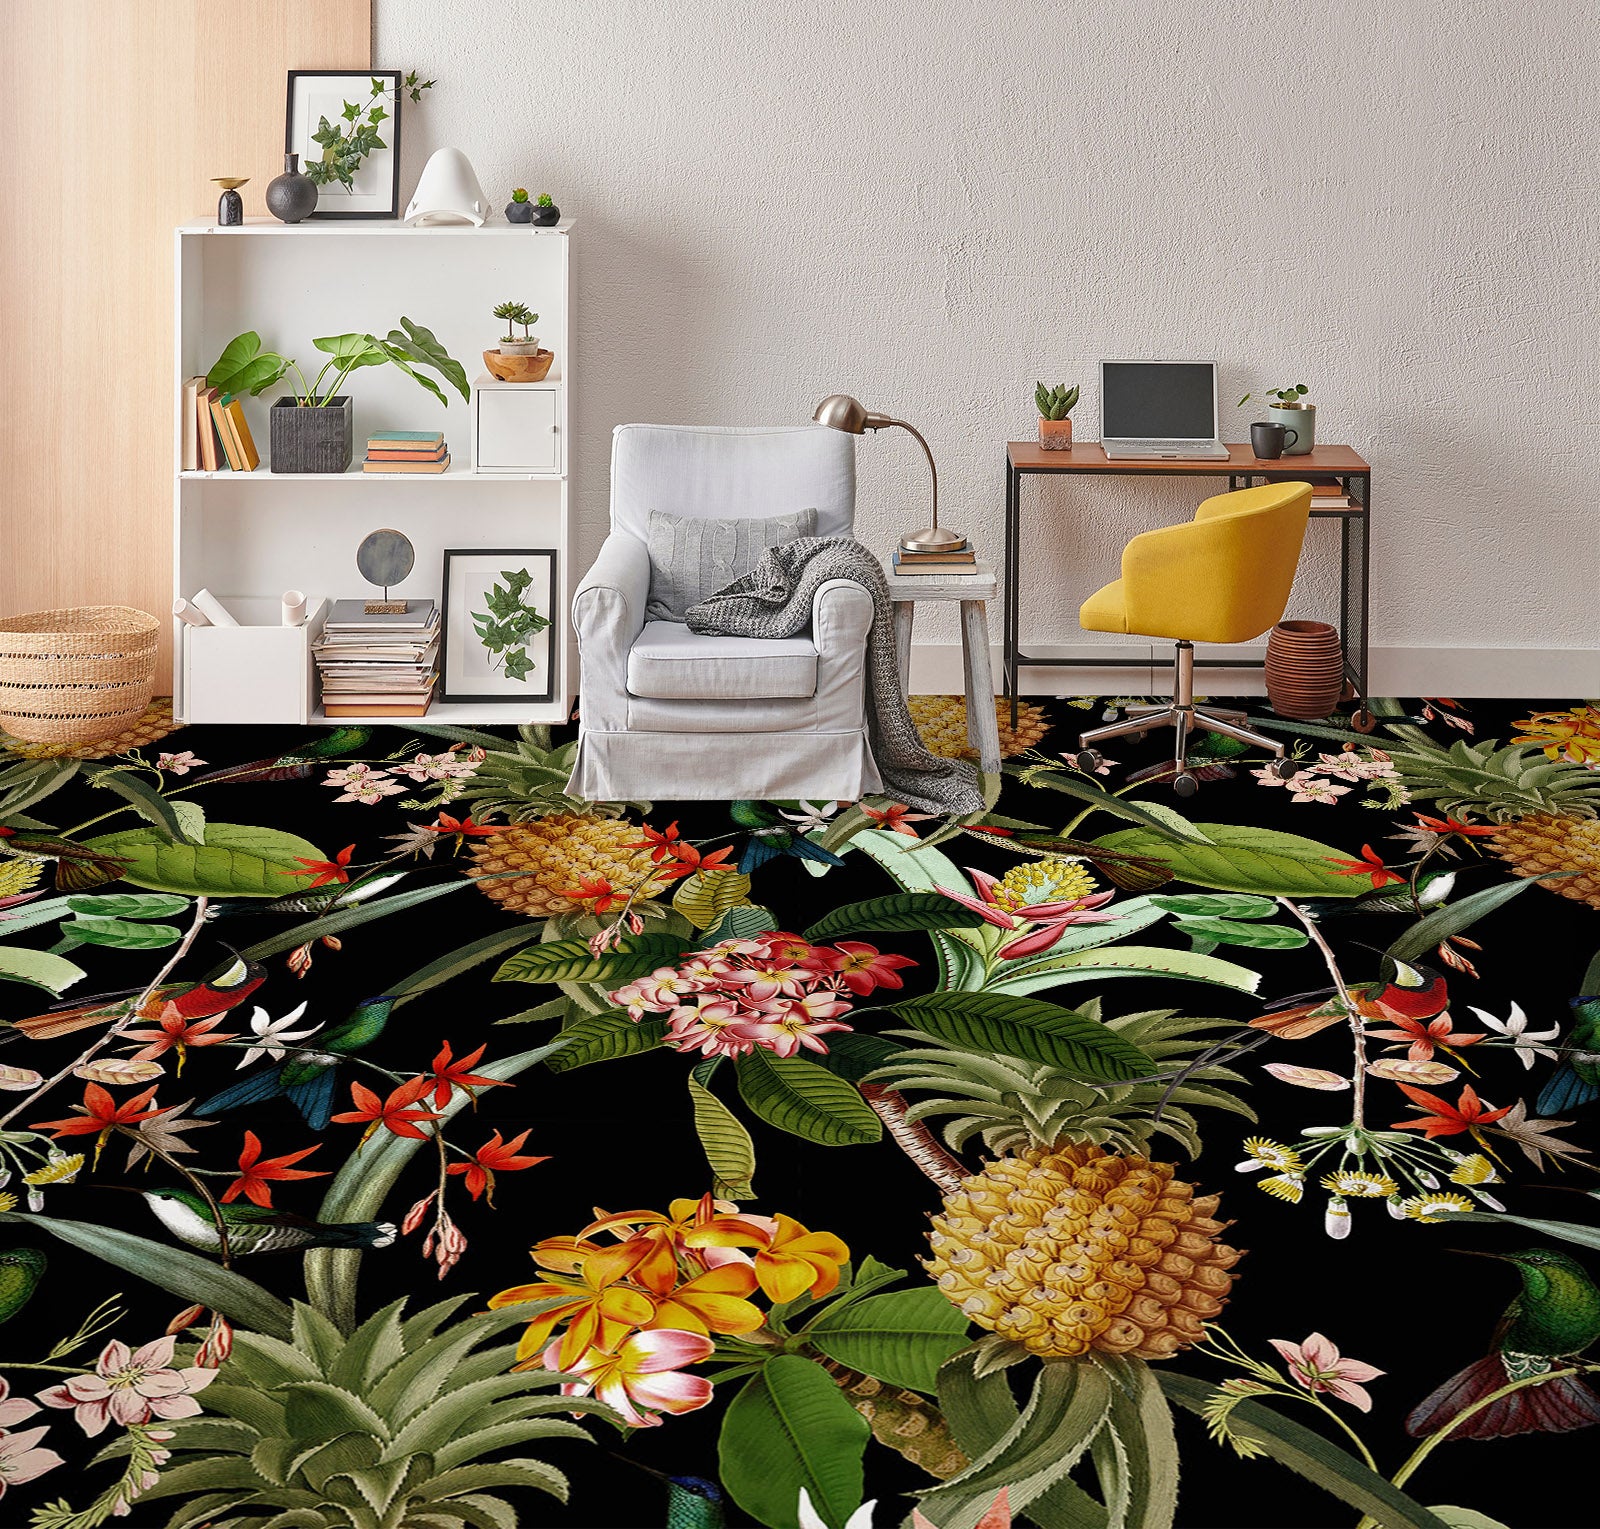 3D Flower Pineapple Leaves 10005 Uta Naumann Floor Mural  Wallpaper Murals Self-Adhesive Removable Print Epoxy